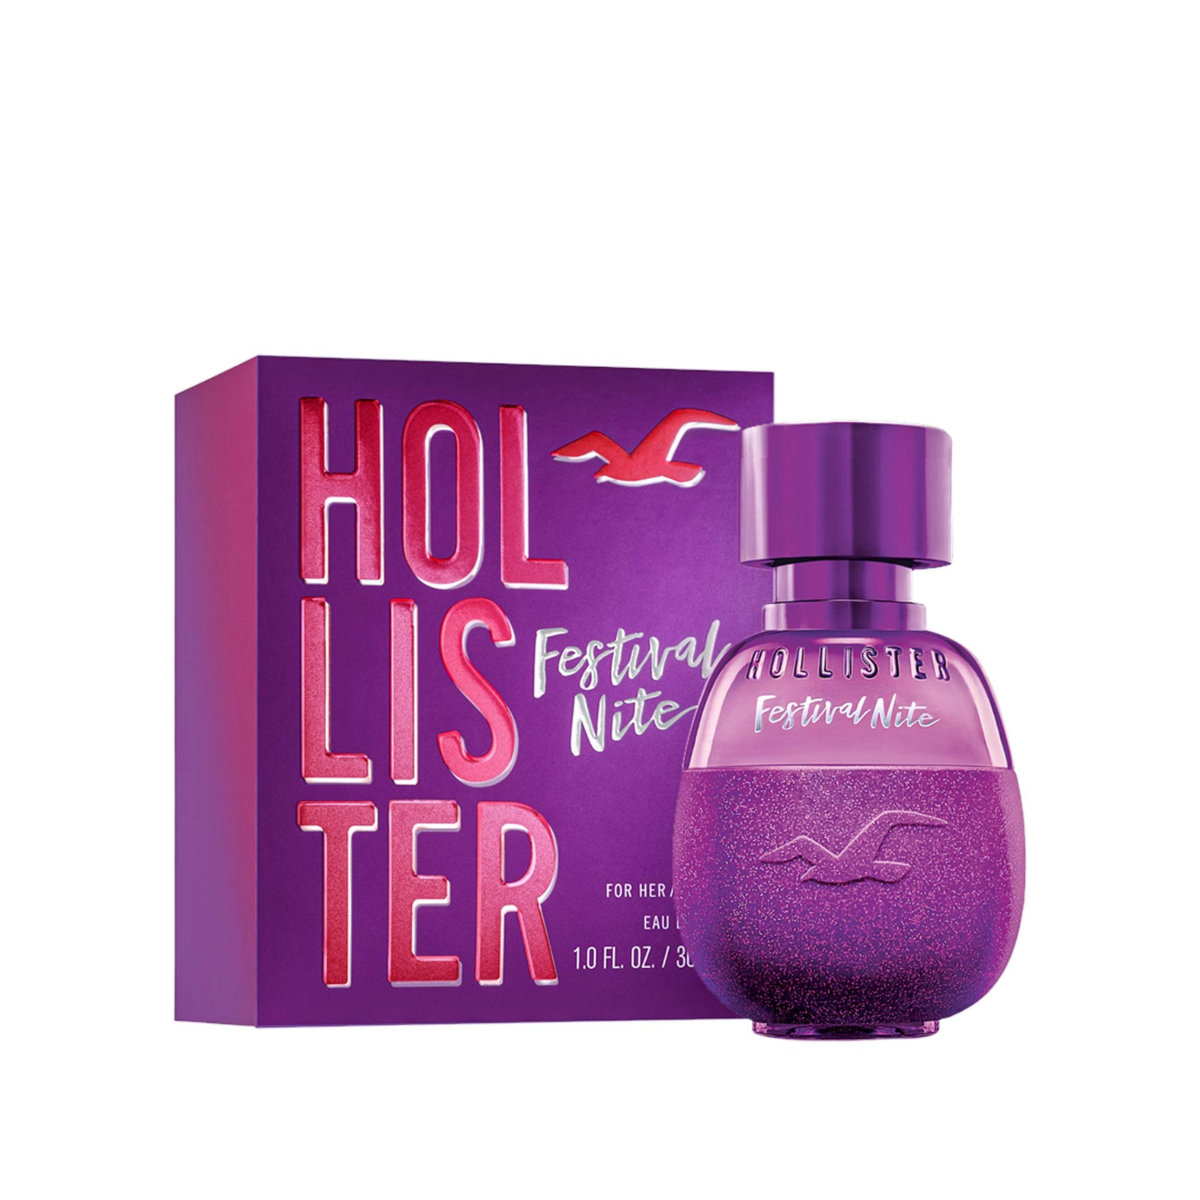 Hollister Festival Nite For Her Eau De Parfum